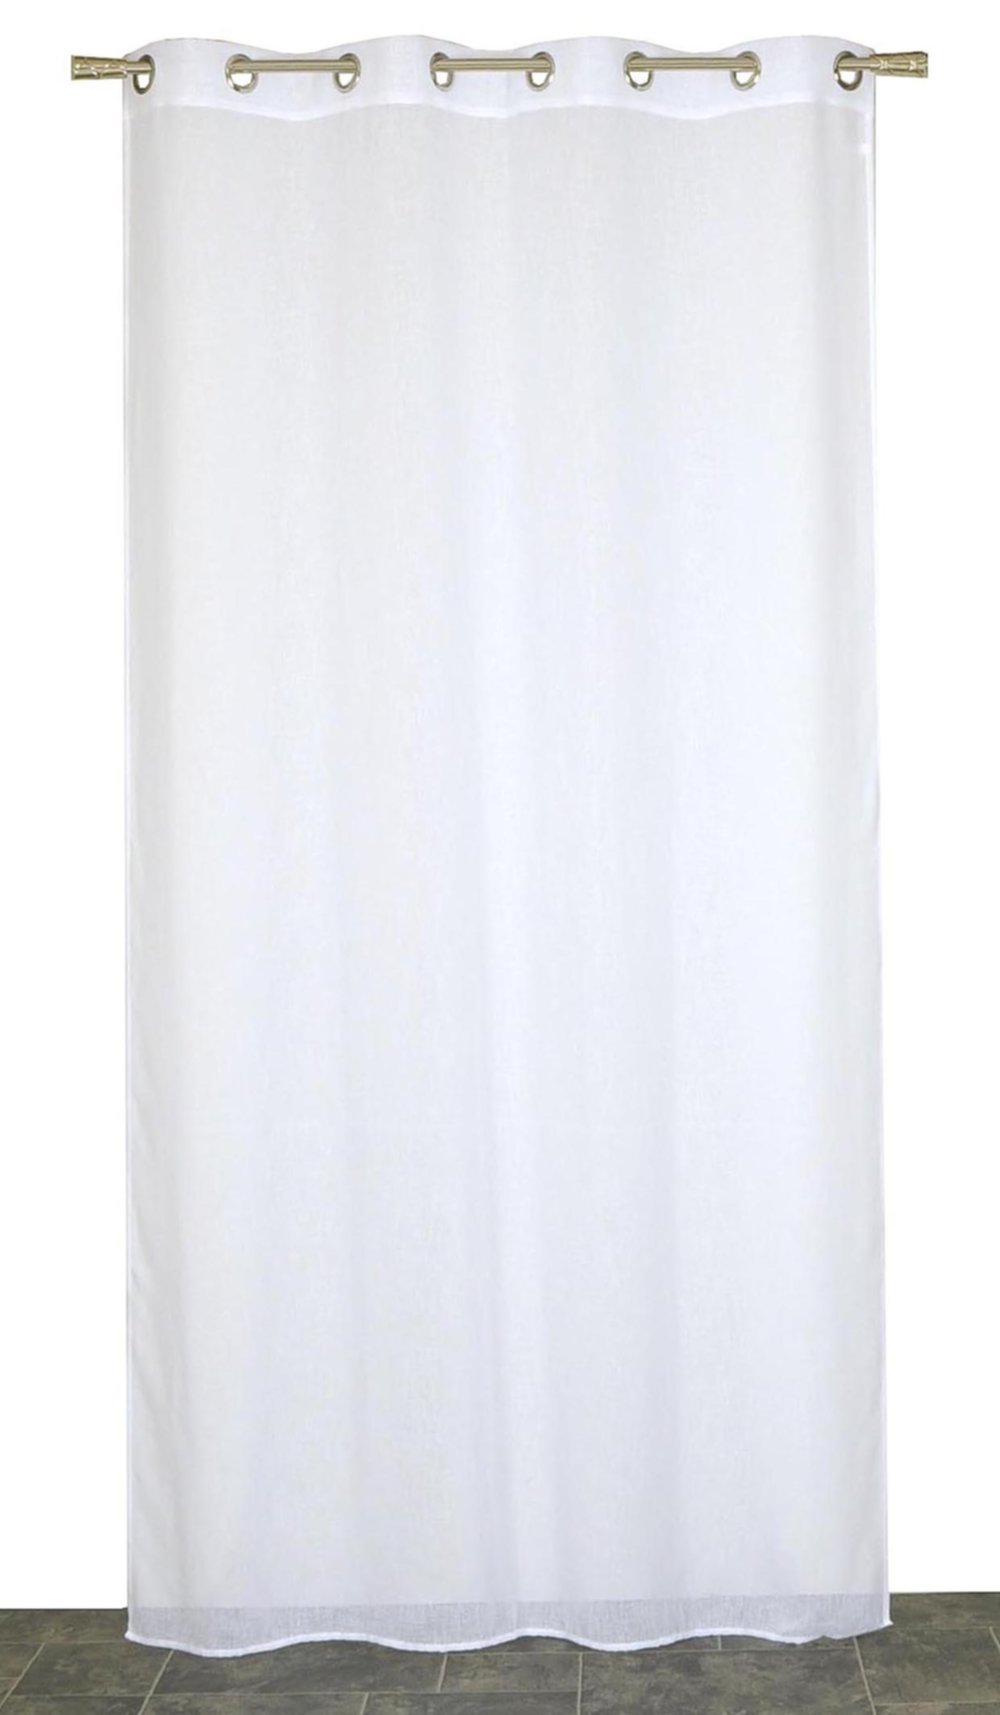 Voilage œillets étamine aspect lin blanc 140x240cm - DYLREV